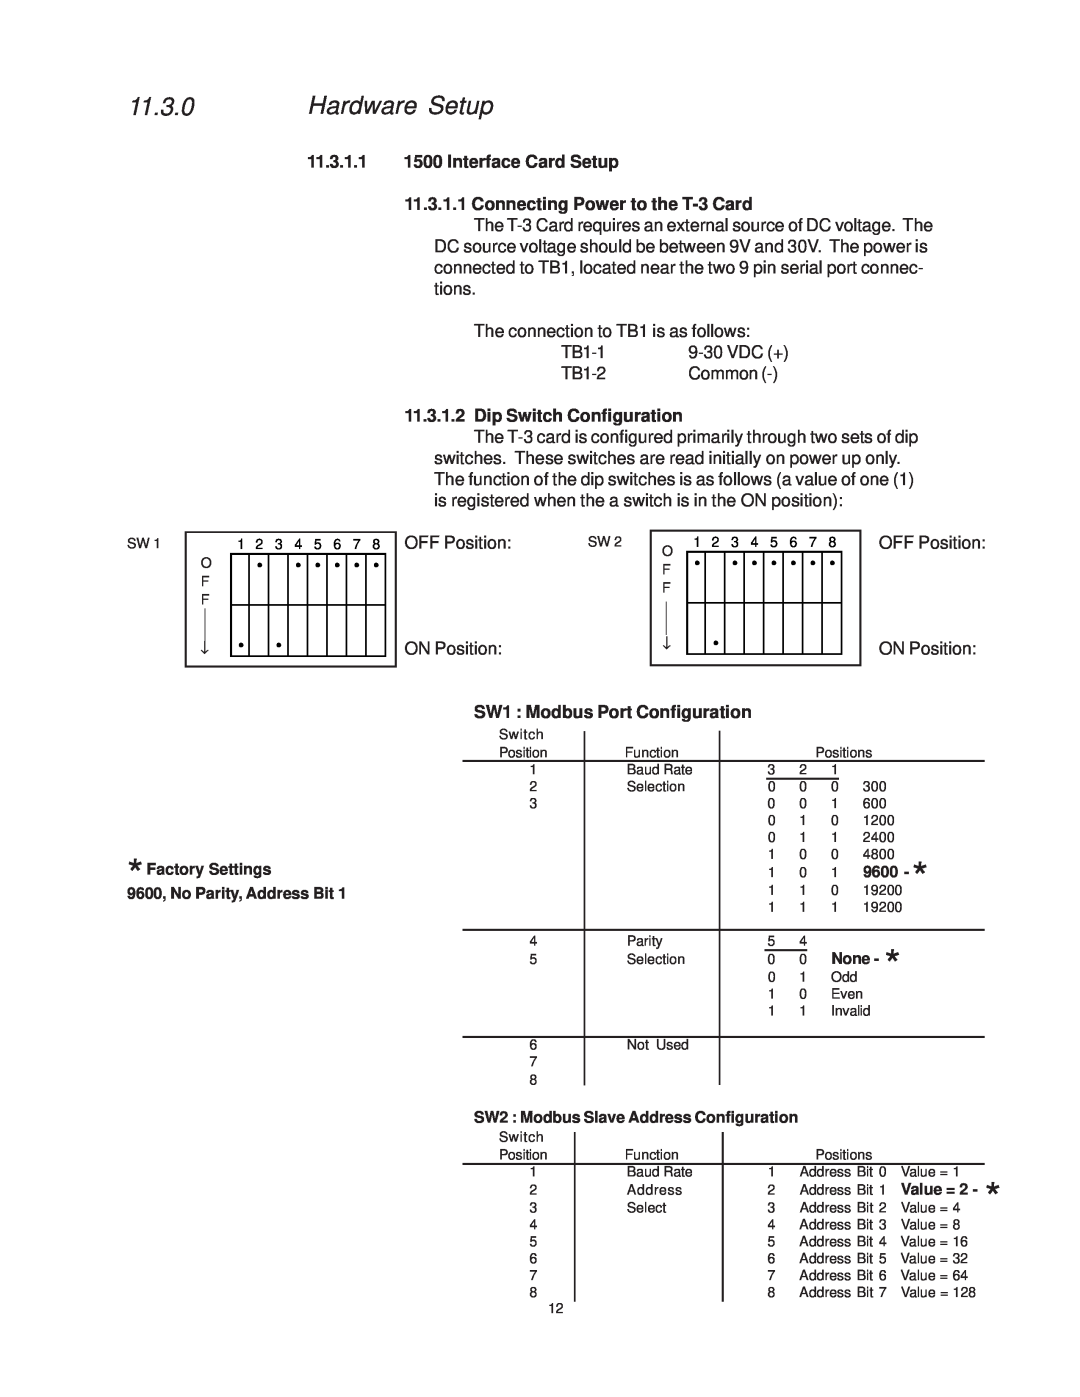 Raypak B6000 manual 11.3.0Hardware Setup, Interface Card Setup, 11.3.1.1Connecting Power to the T-3Card 